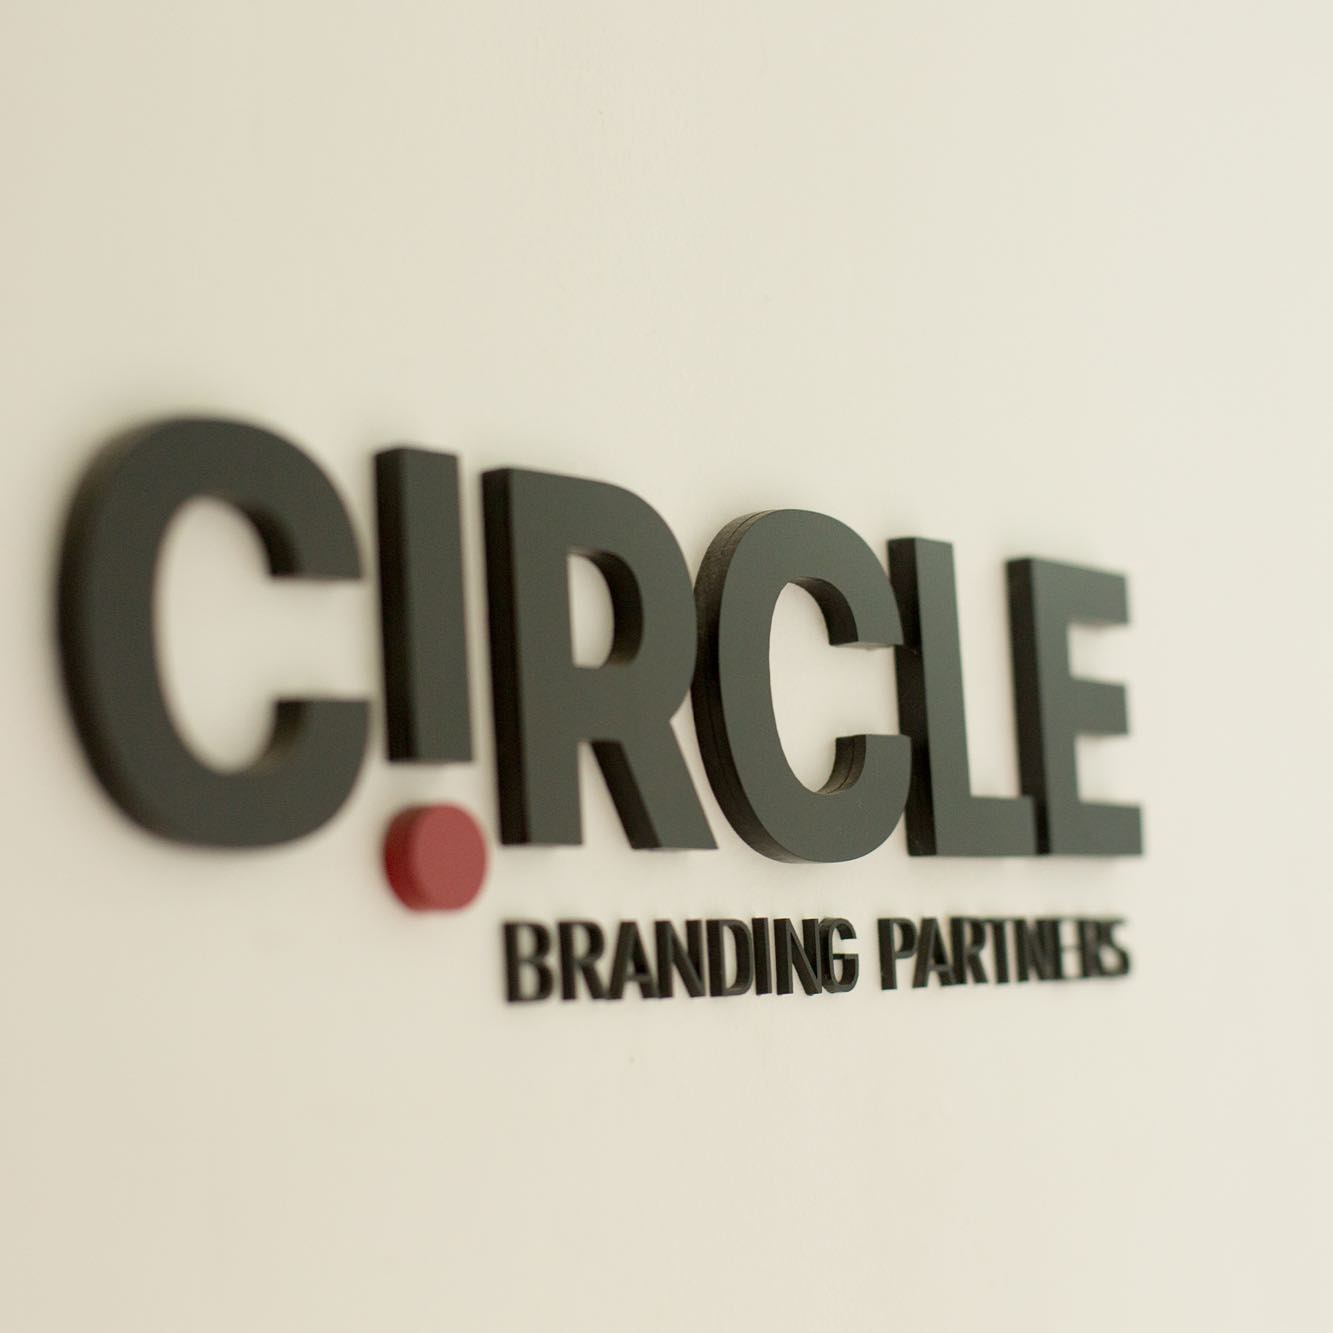 #circlebranding